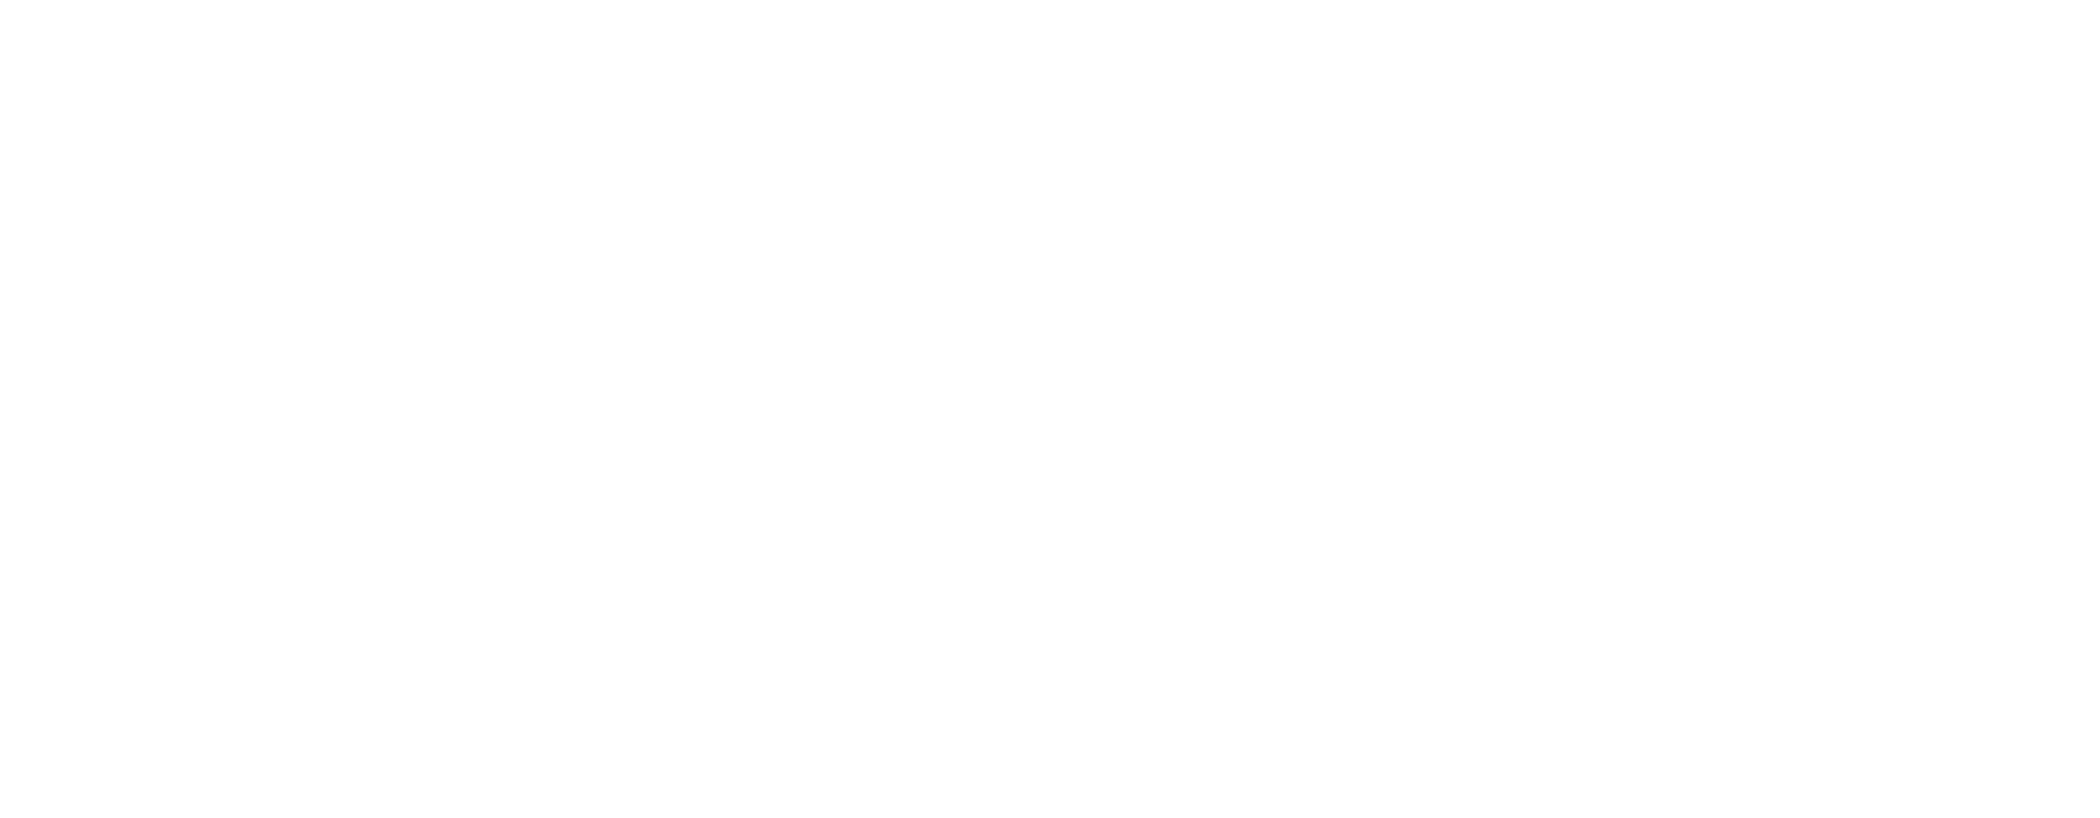 missing the-agora logo